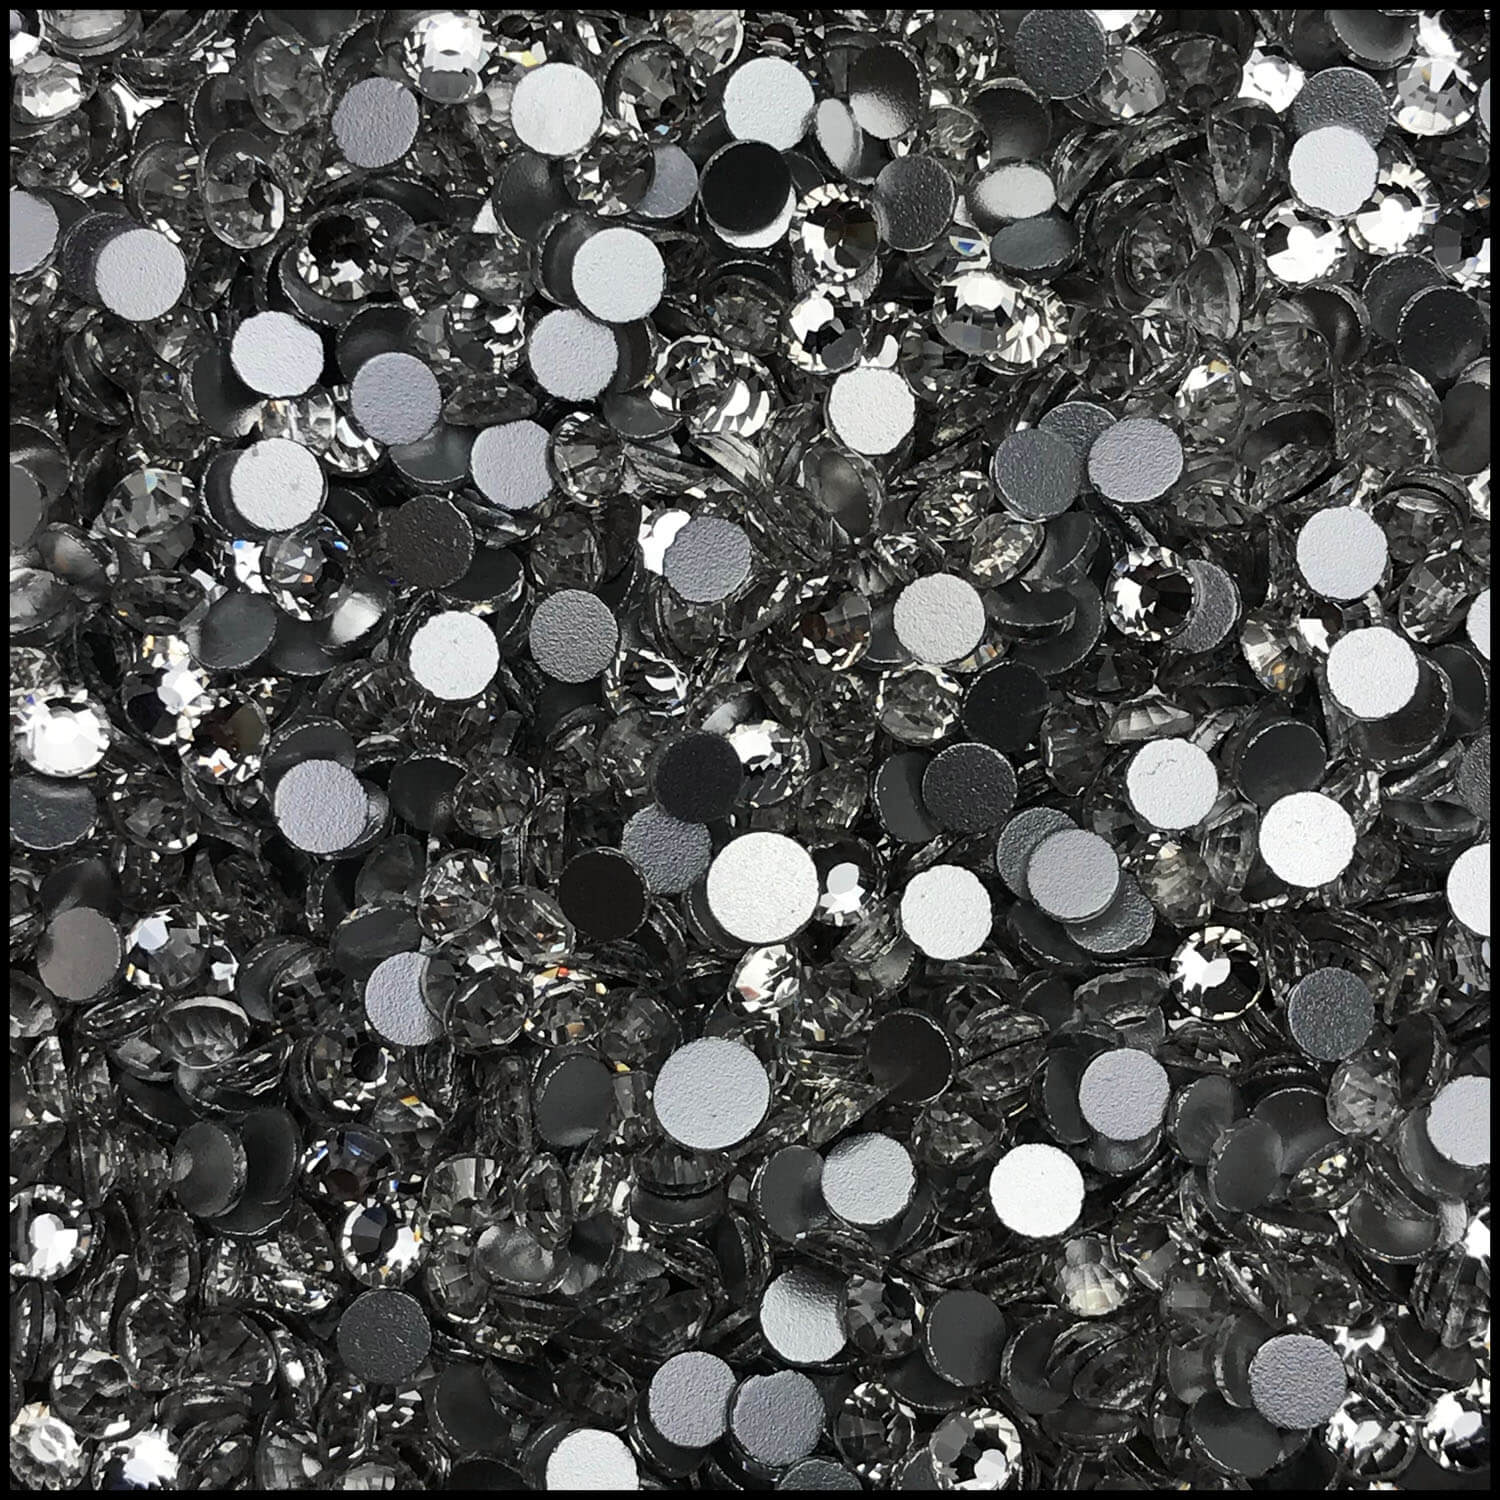 Threadart Bulk Hot Fix Rhinestones Crystal - SS16 (4mm) - 14400